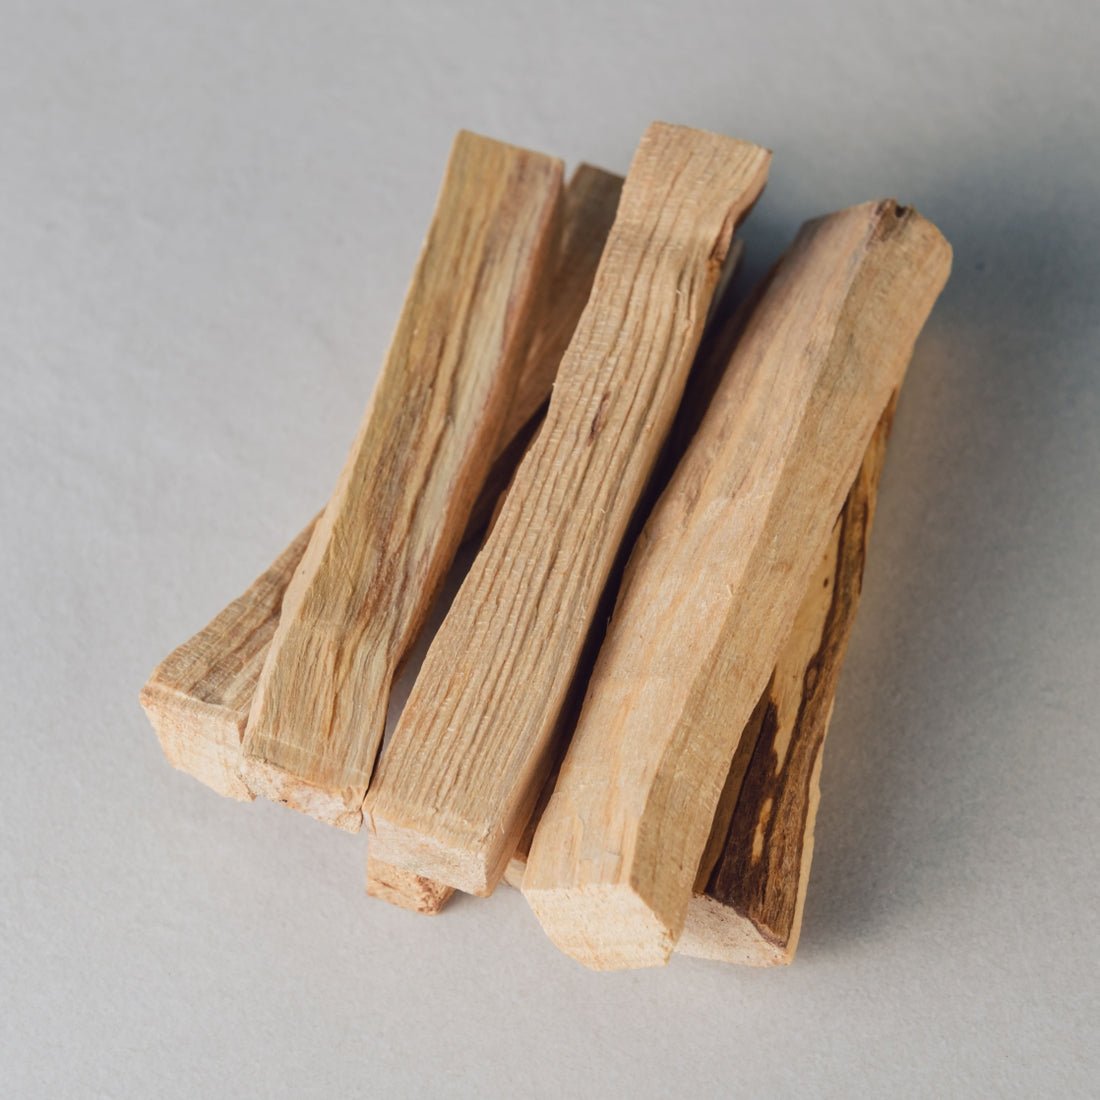 Palo Santo Holy Wood Sticks from Peru - Incense